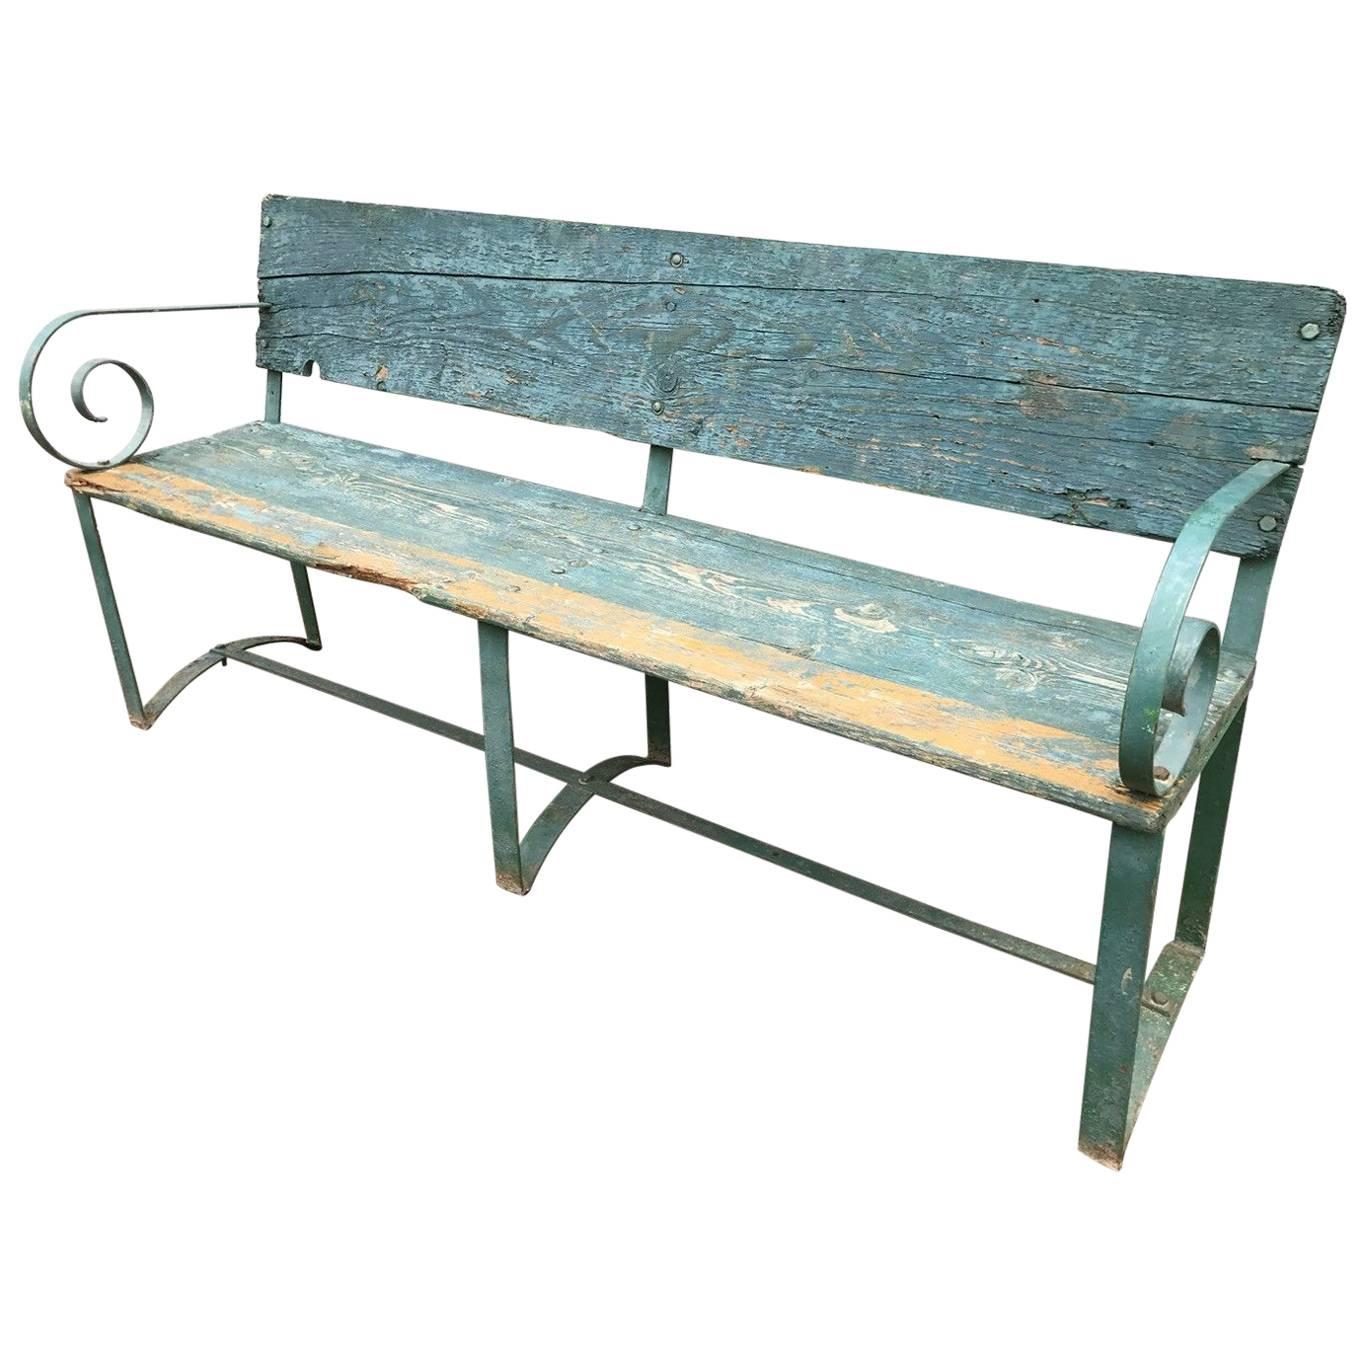 Rare Italian Antique/Vintage Bench Outdoor, Garden, Rustic, Country For Sale